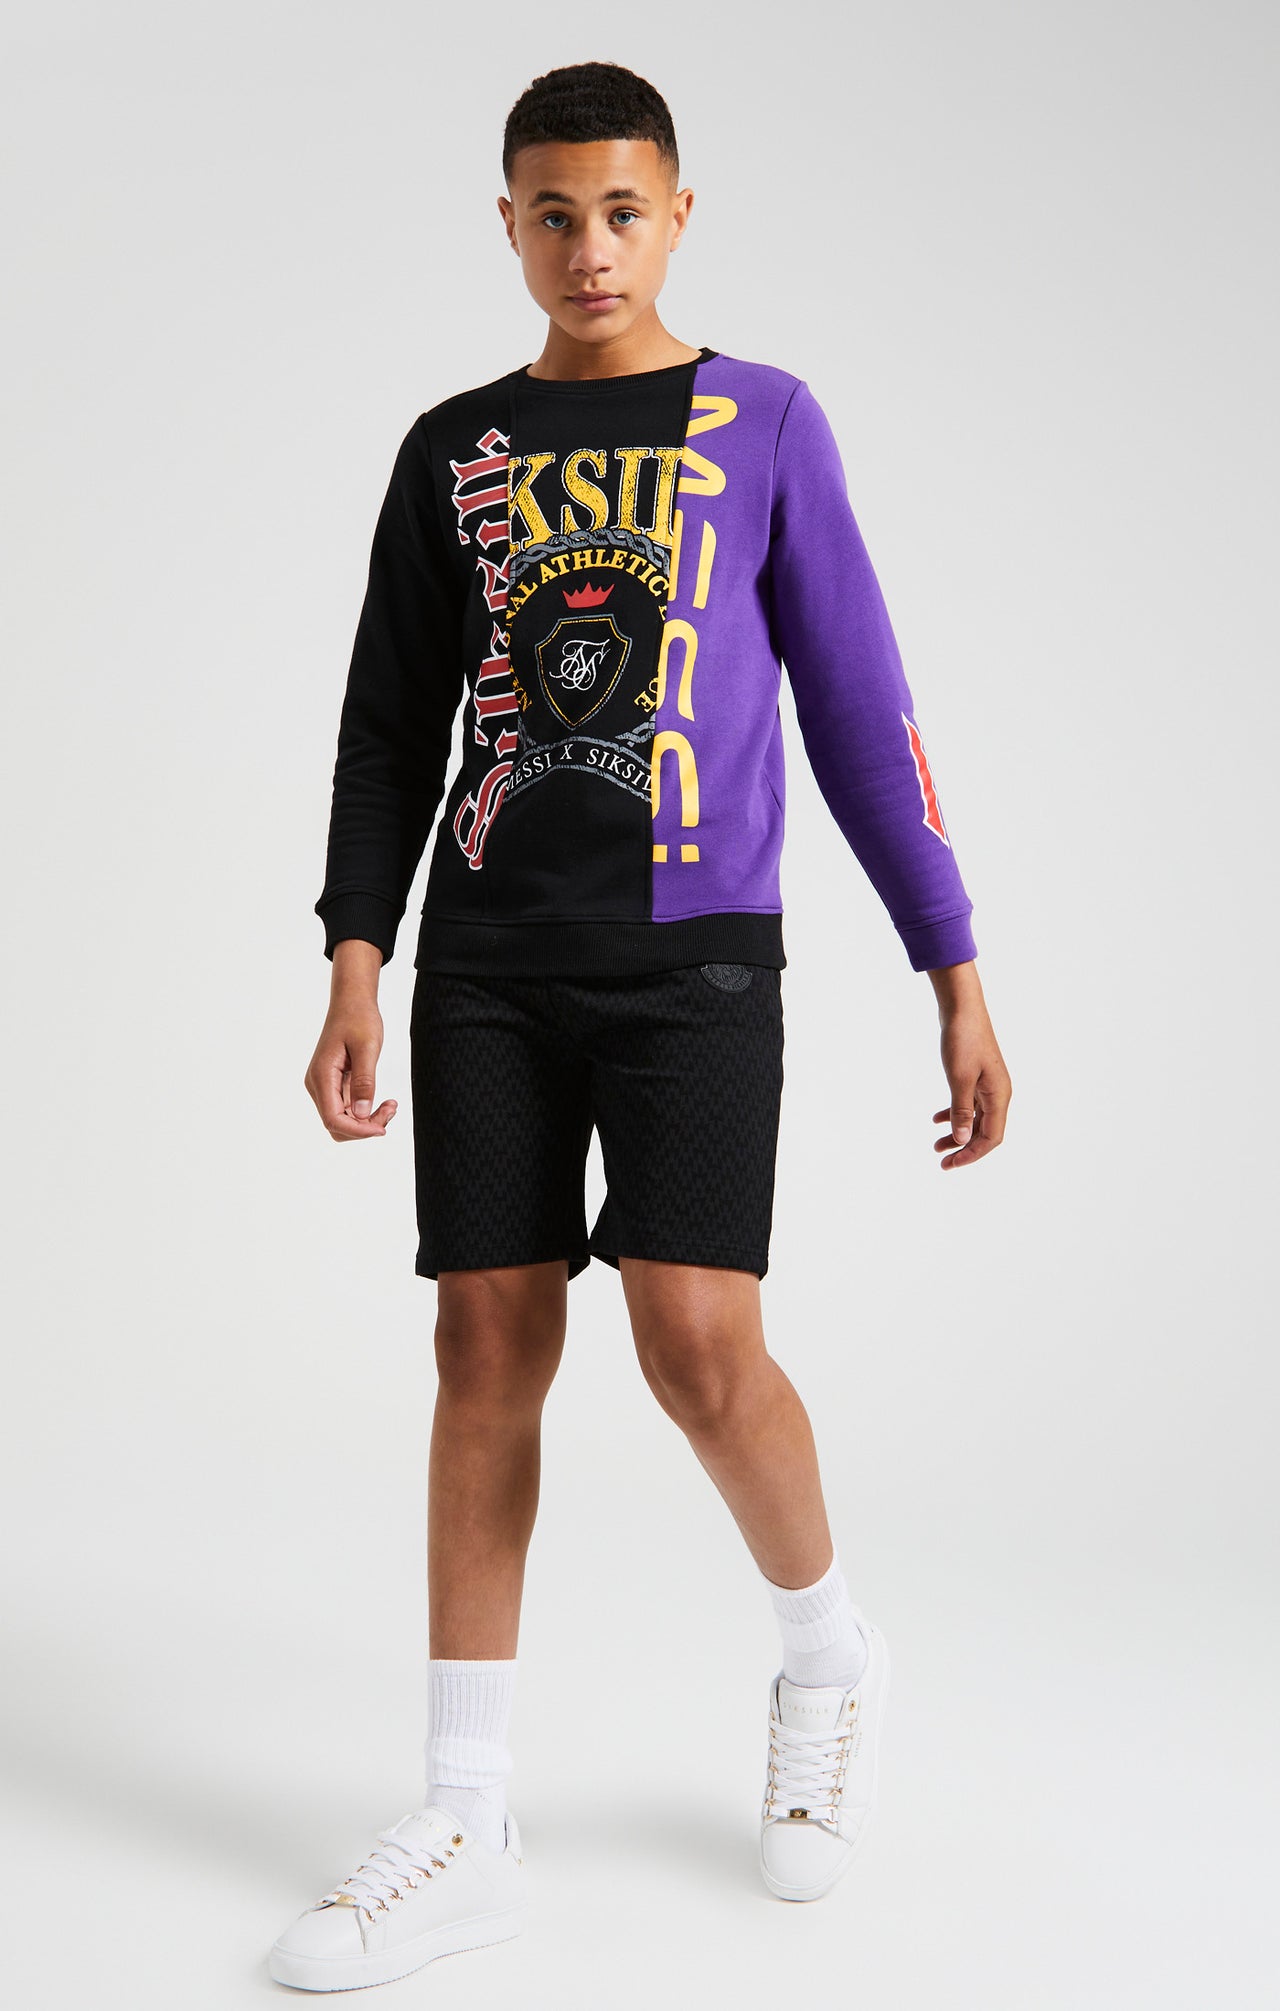 Messi x SikSilk Retro Varsity Crew Sweater - Black & Purple (3)